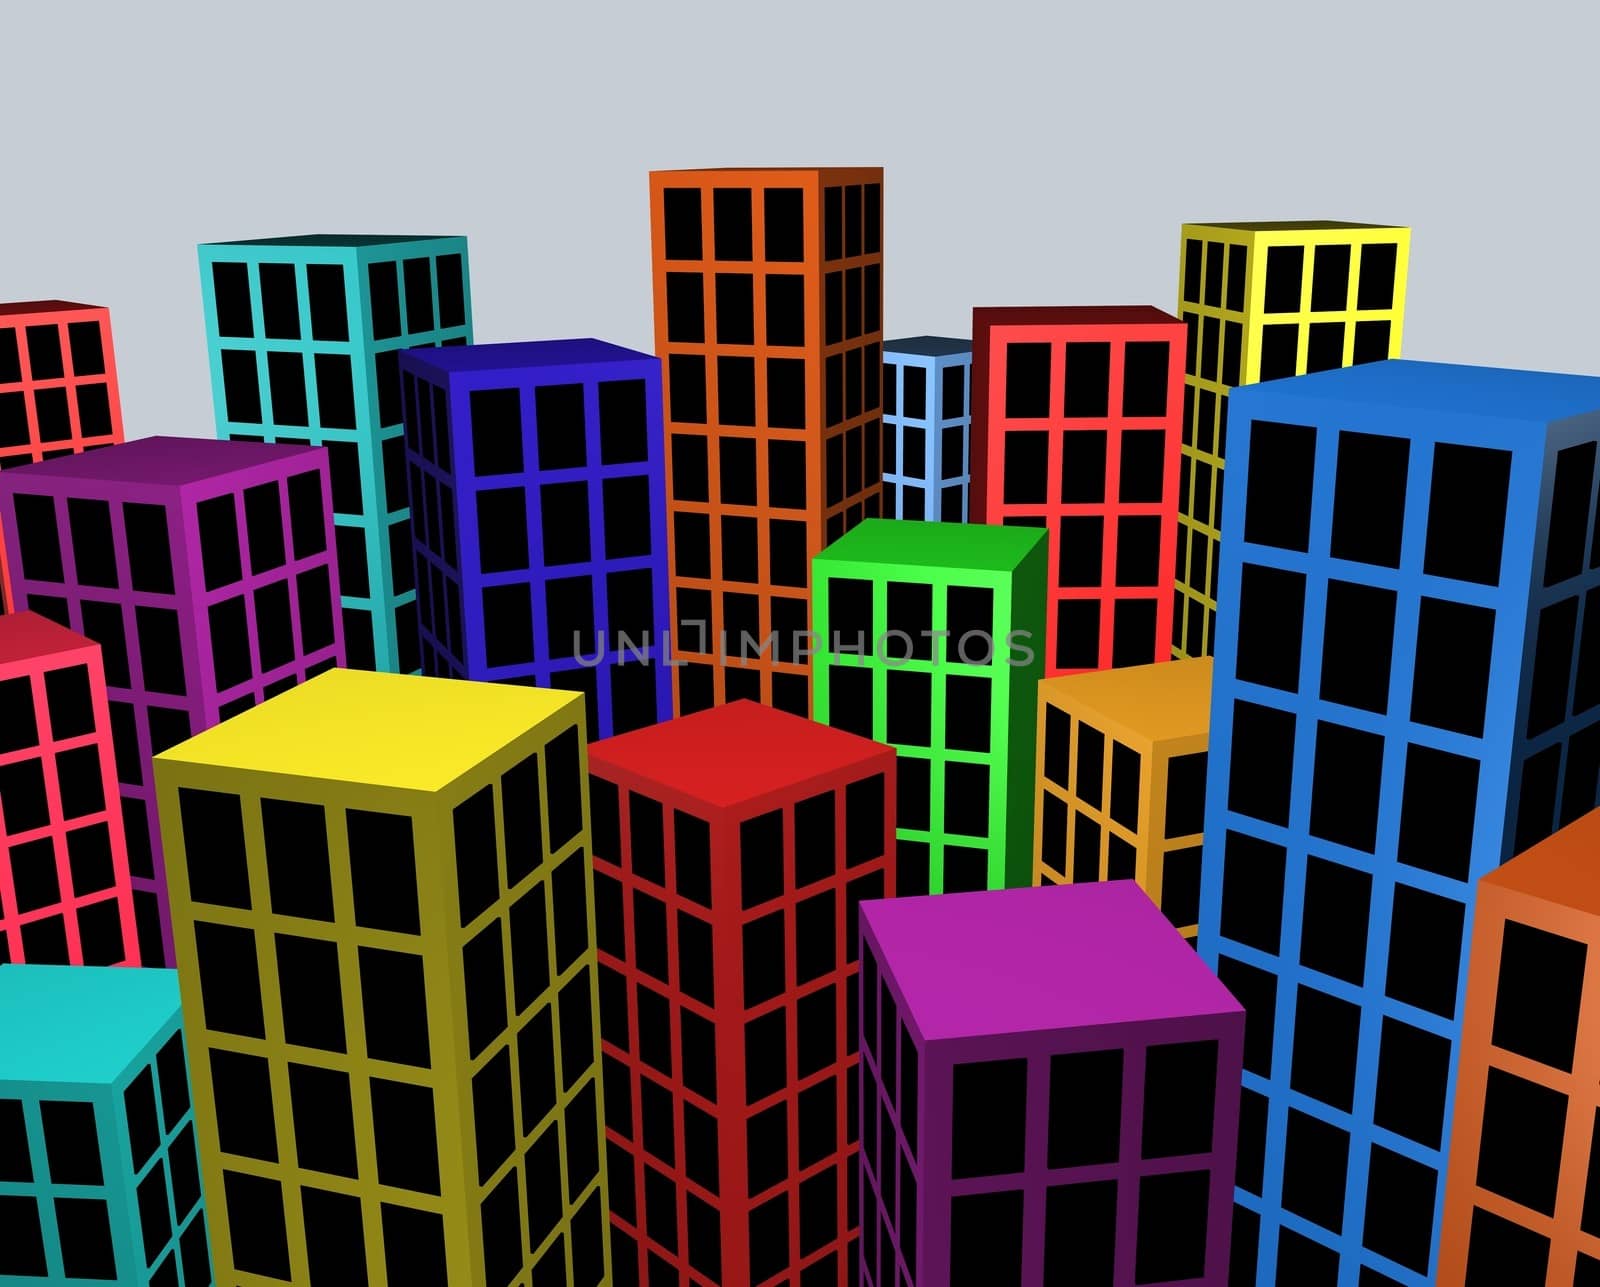 Colorful city blocks by darrenwhittingham